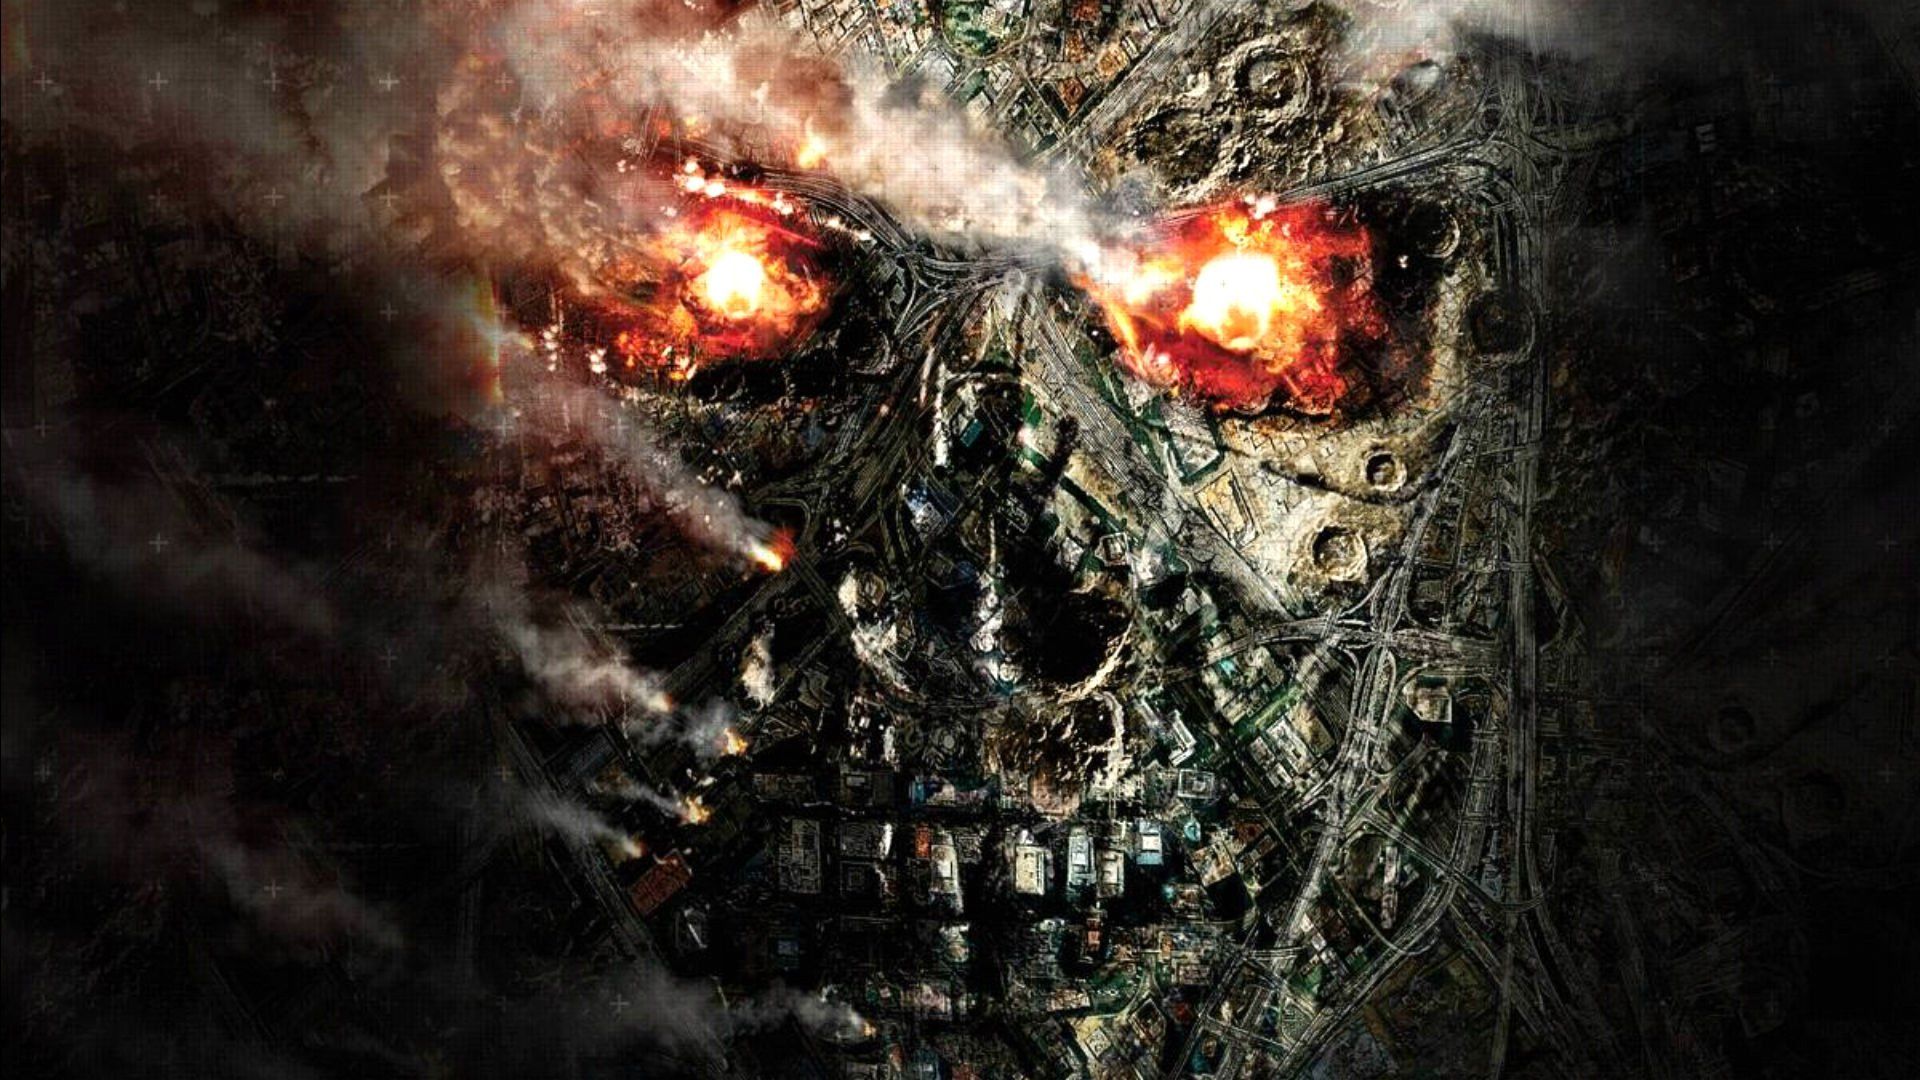 Terminator: Genisys HD Wallpaperwallpaper.net